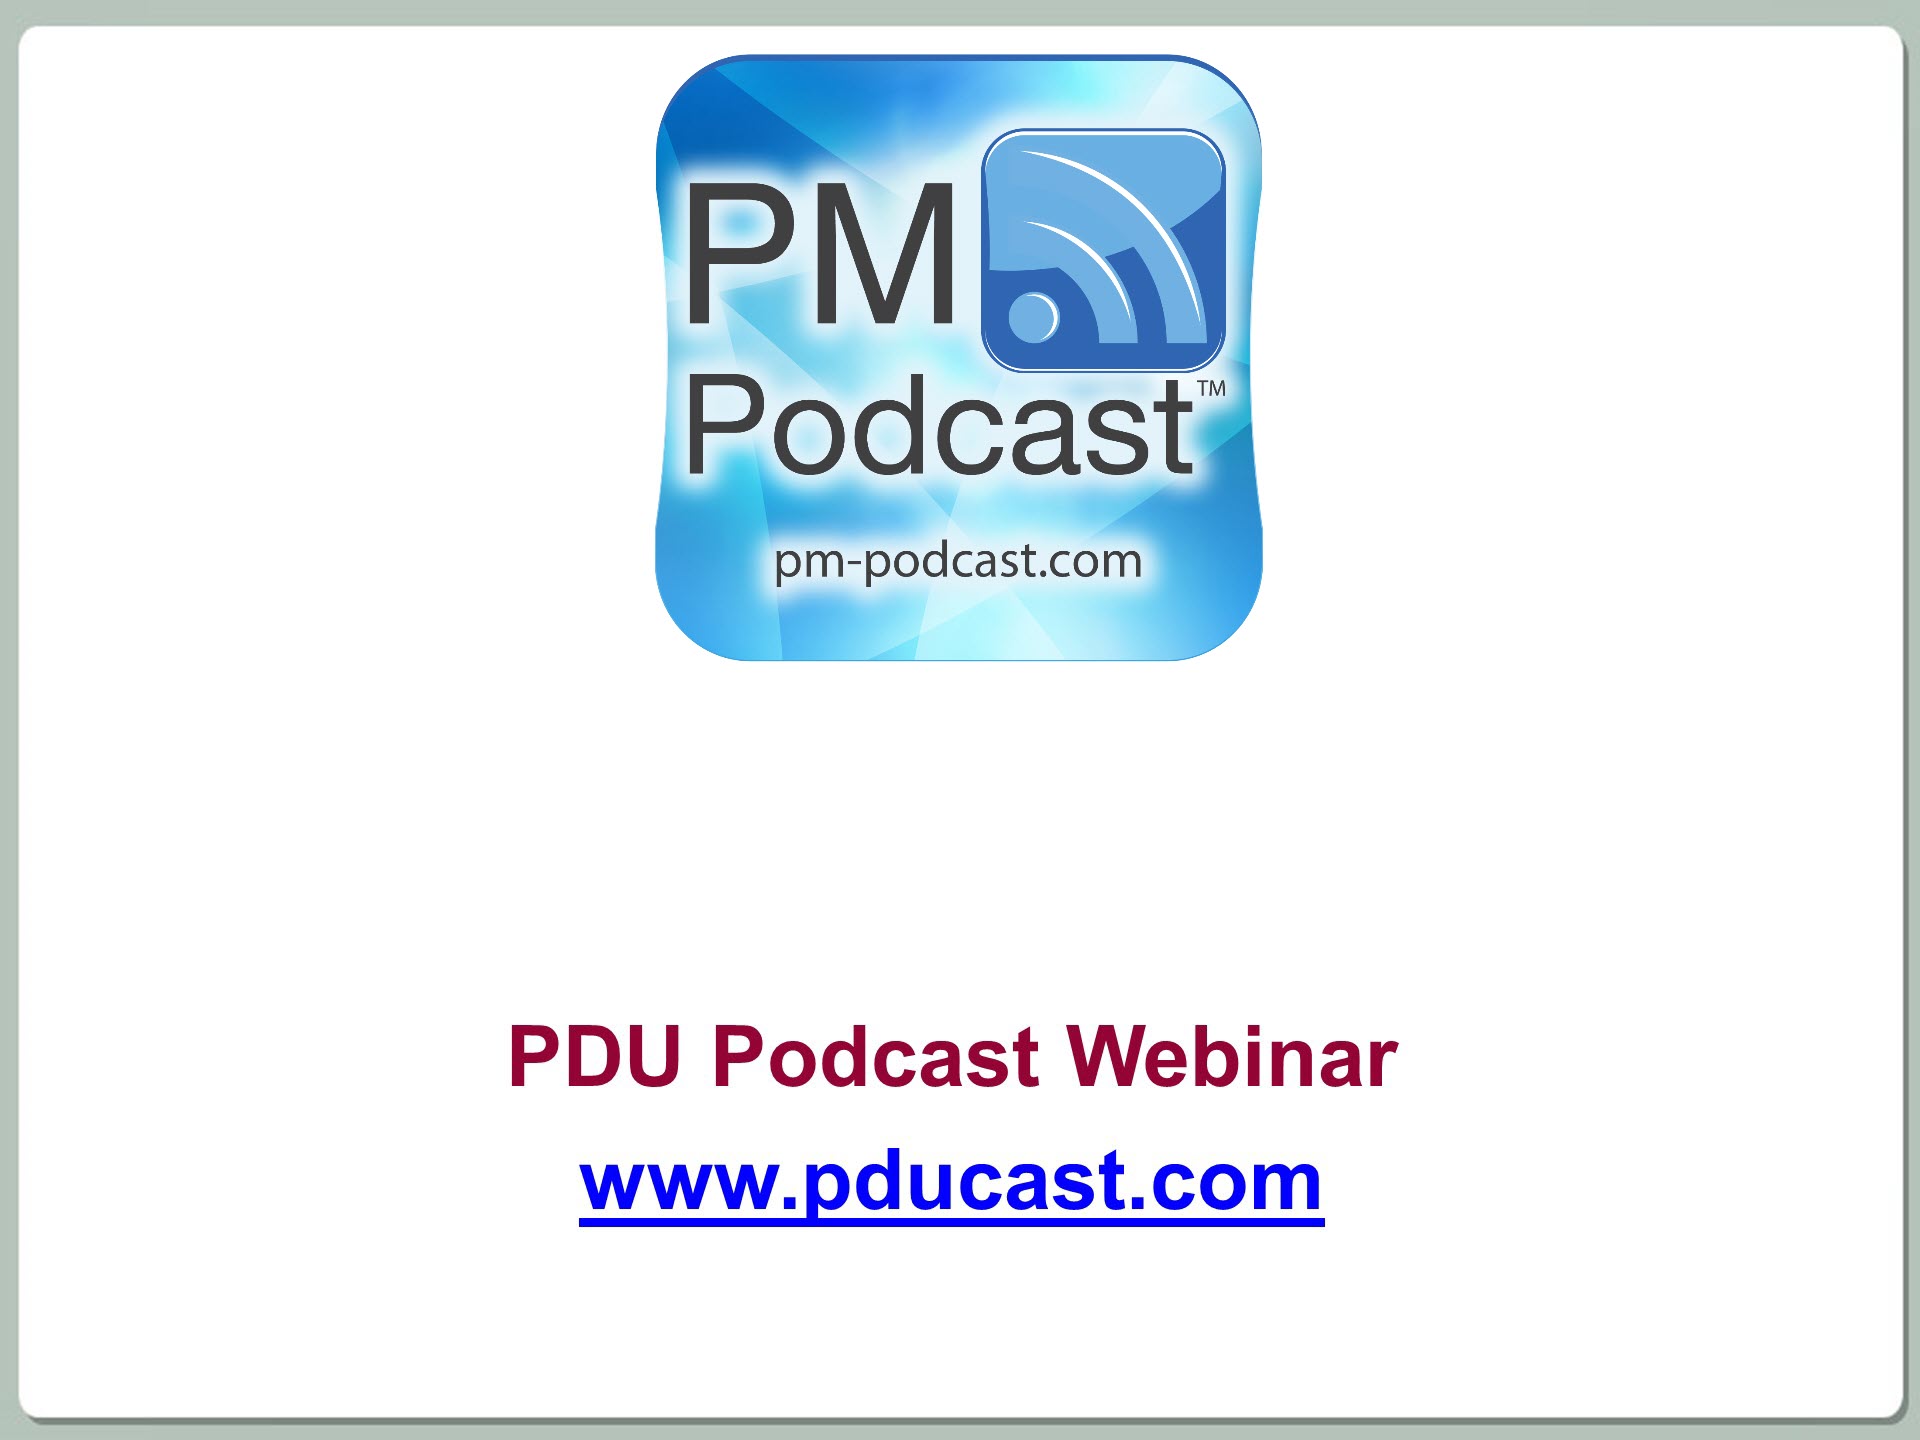 PM_Podcast_Video_Poster.jpg - 141.75 kB